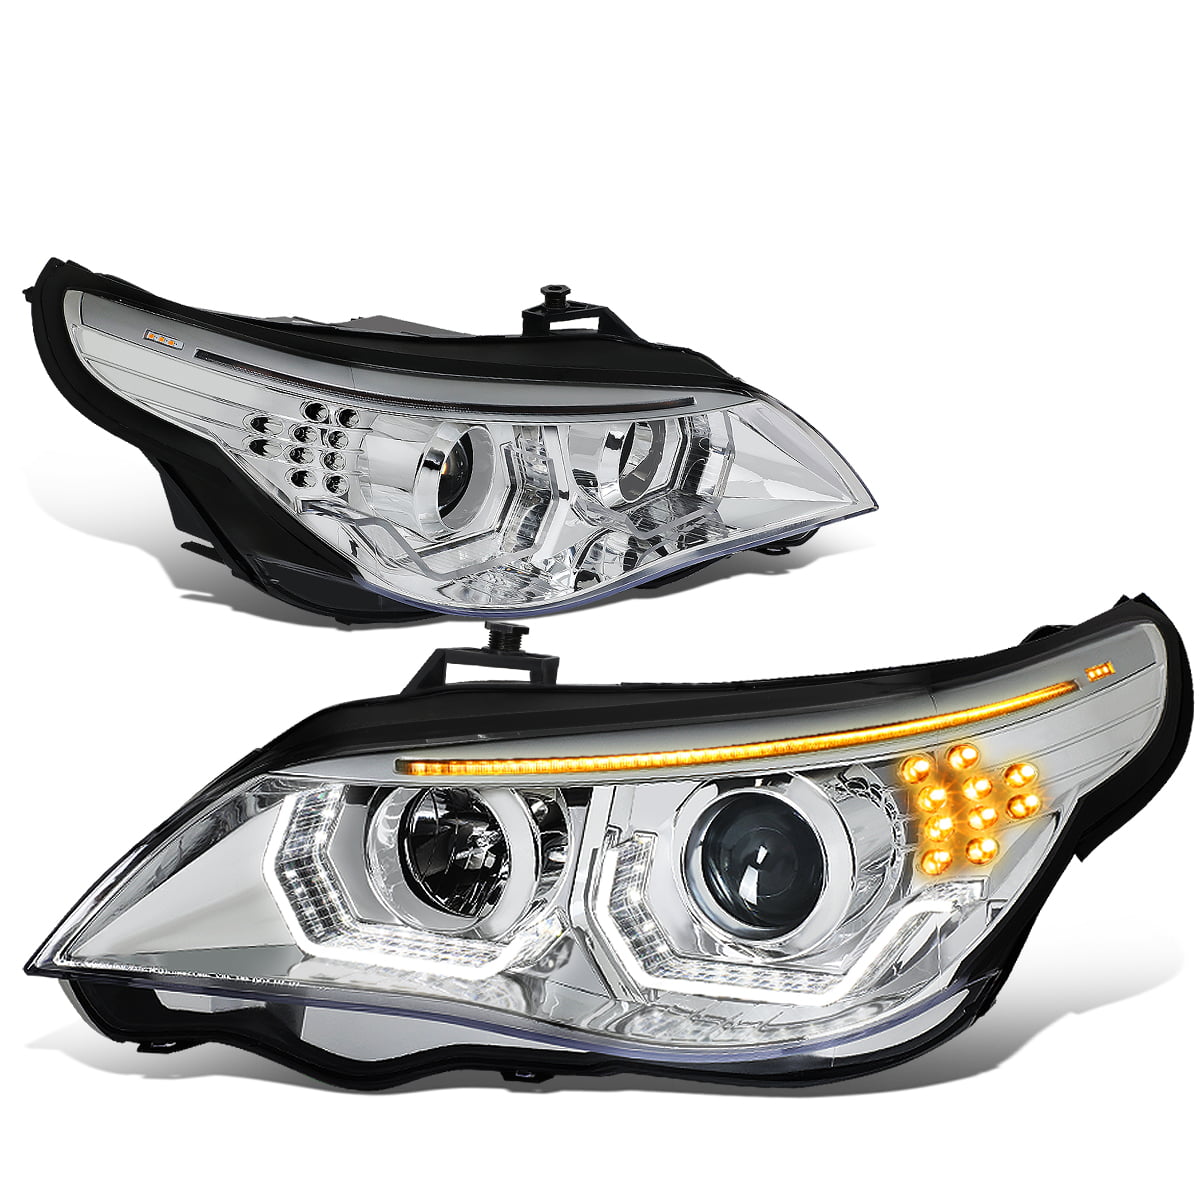 4/" x 6/" Headlamps Pair High Power All LED Chrome Headlights W// LED Turn Signals